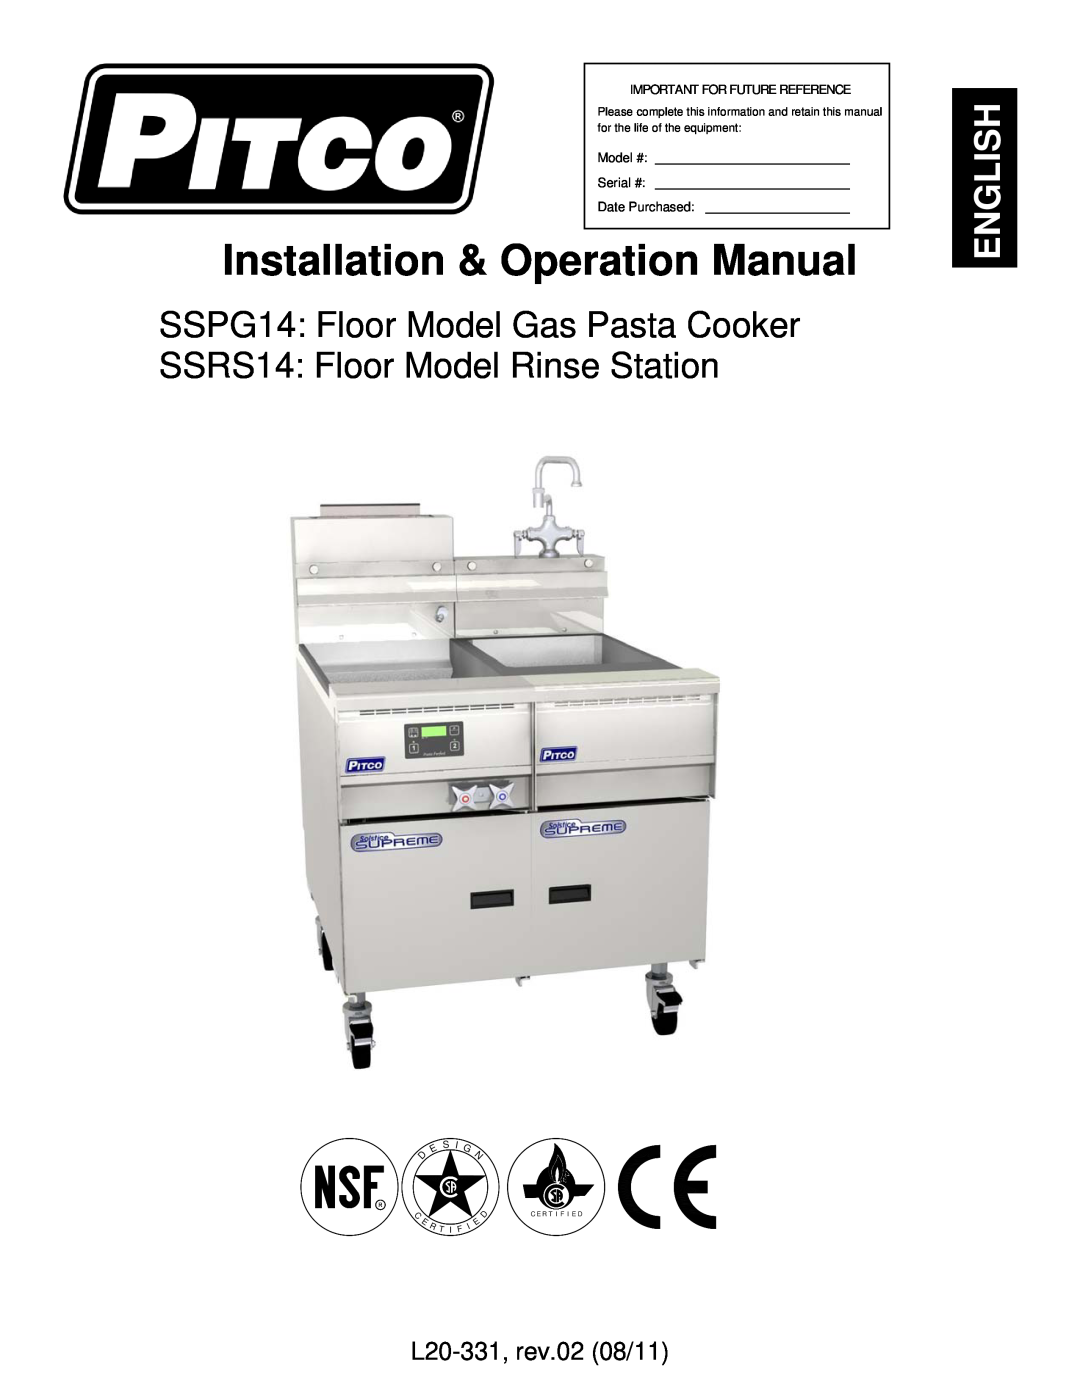 Pitco Frialator operation manual L20-331,rev.02 08/11, SSPG14 Floor Model Gas Pasta Cooker, English, Model #, Serial # 